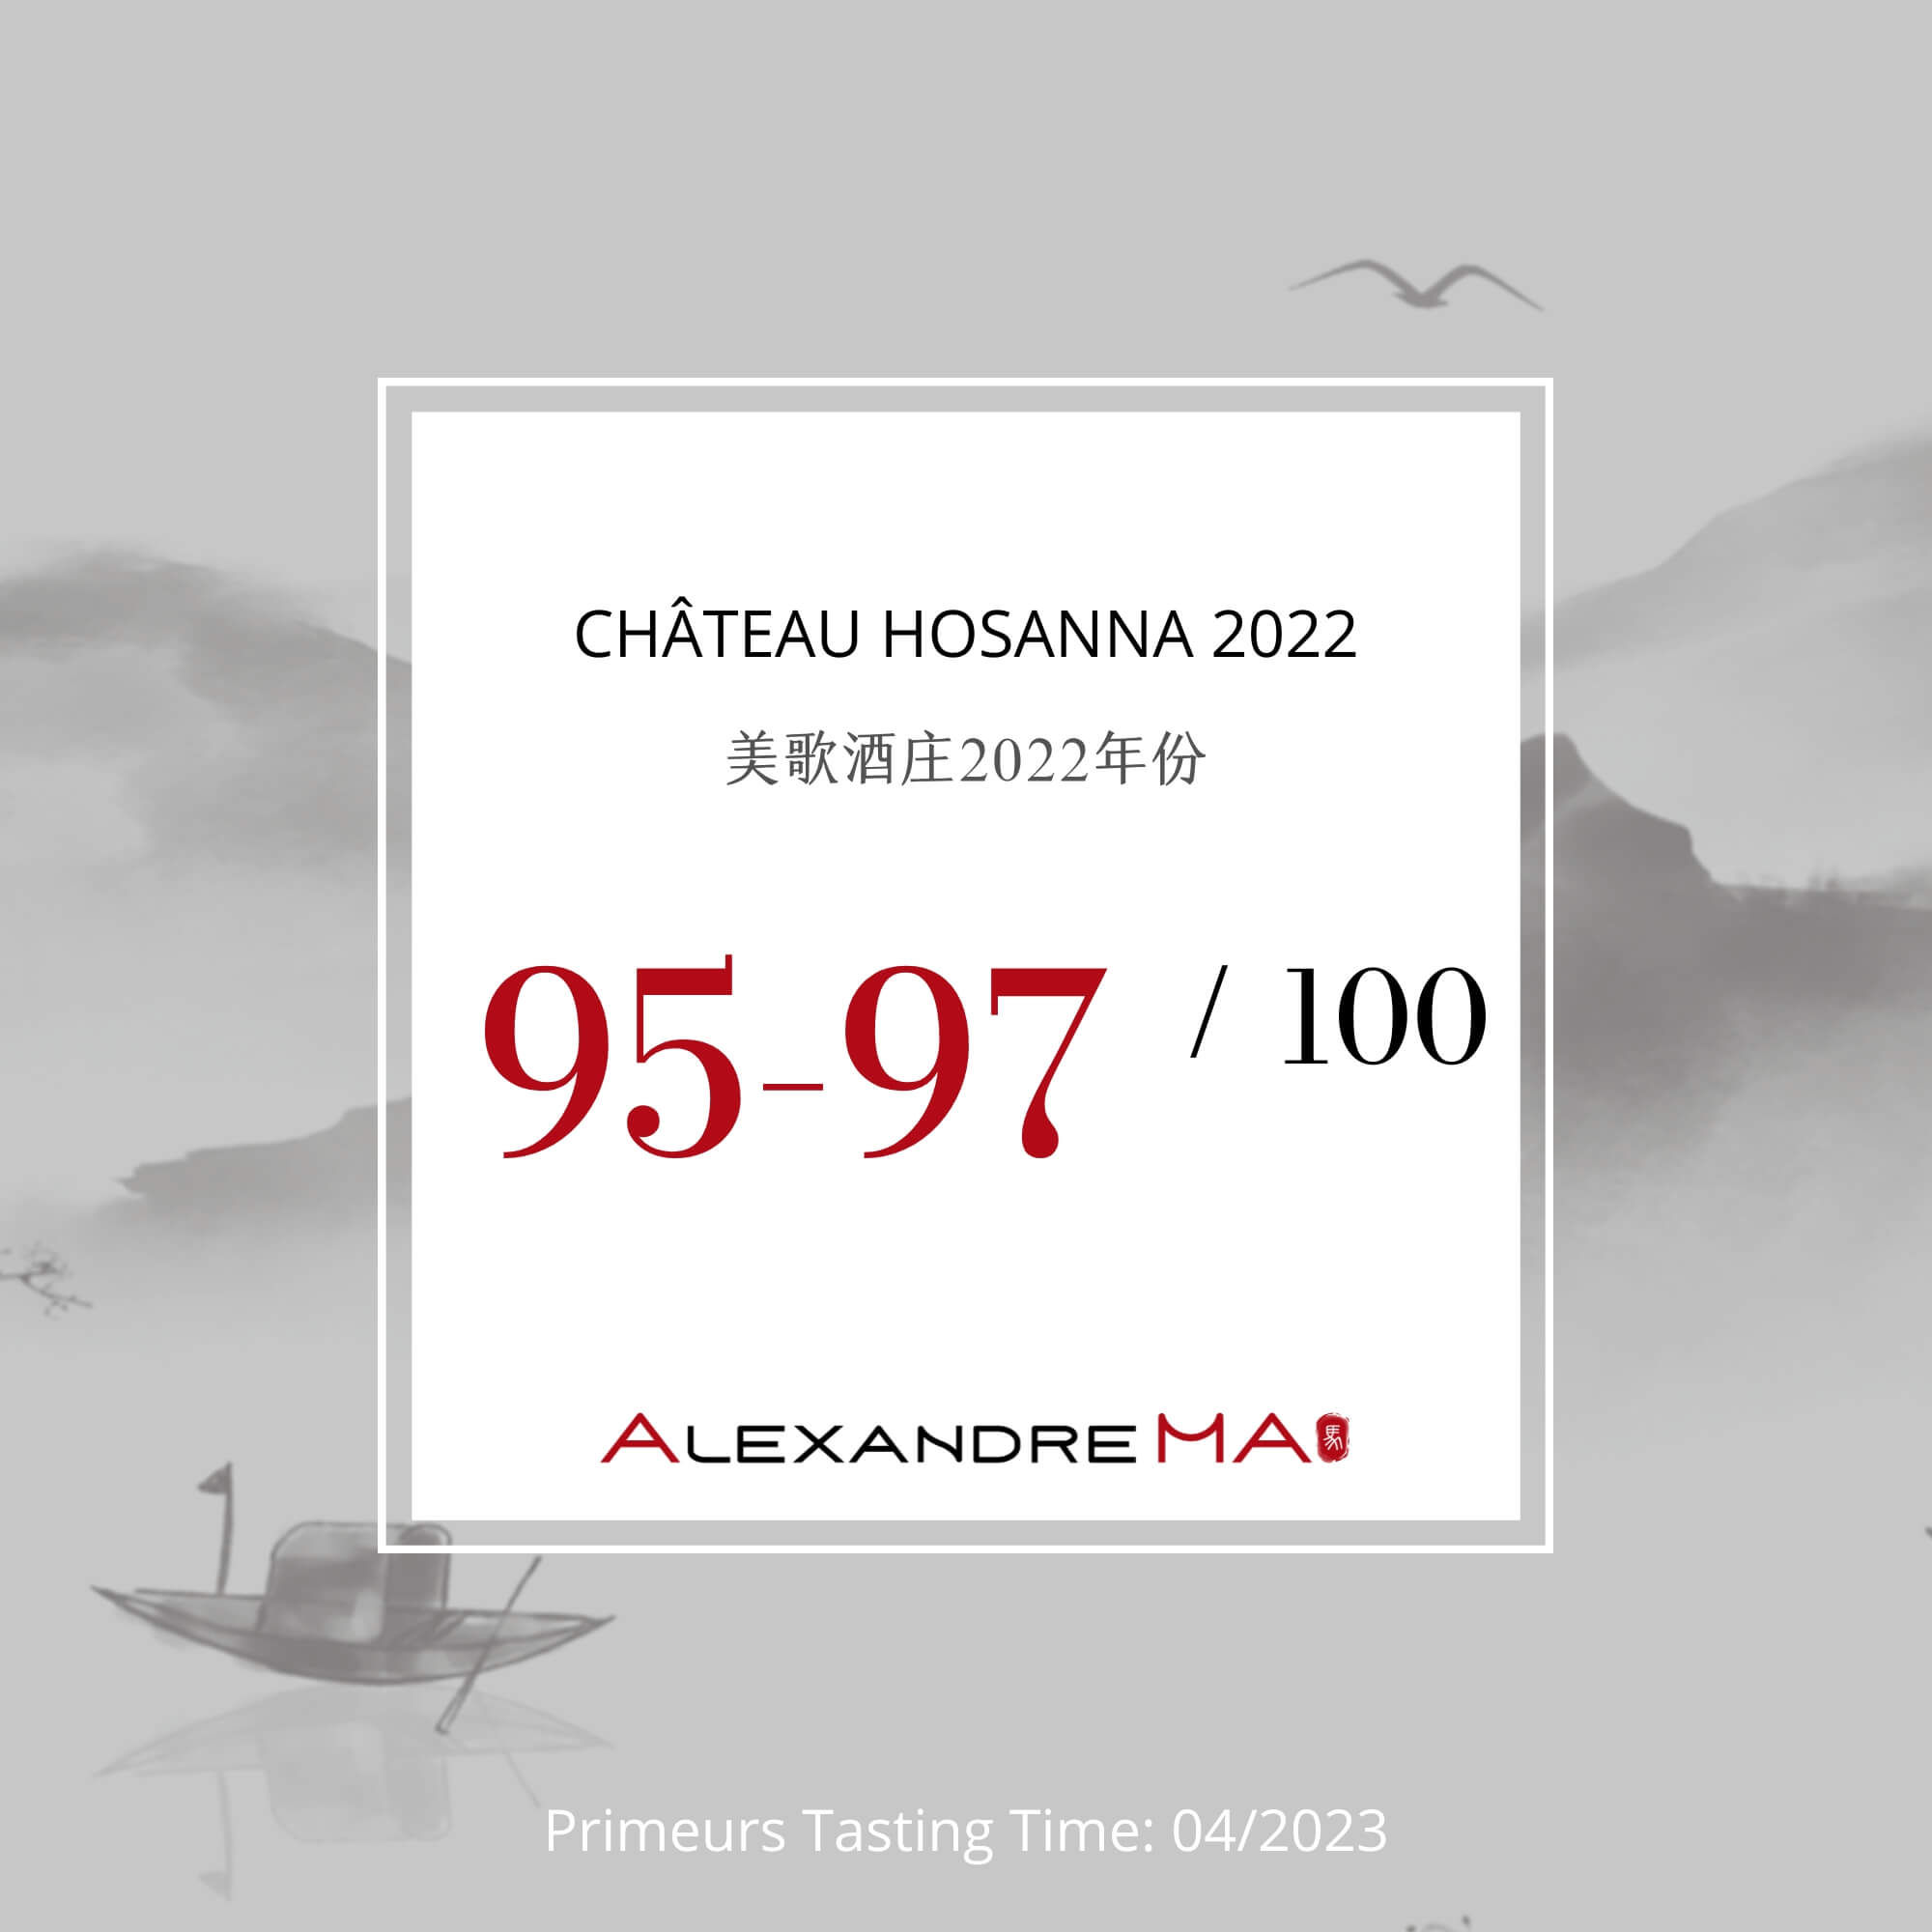 Château Hosanna 2022 Primeurs - Alexandre MA